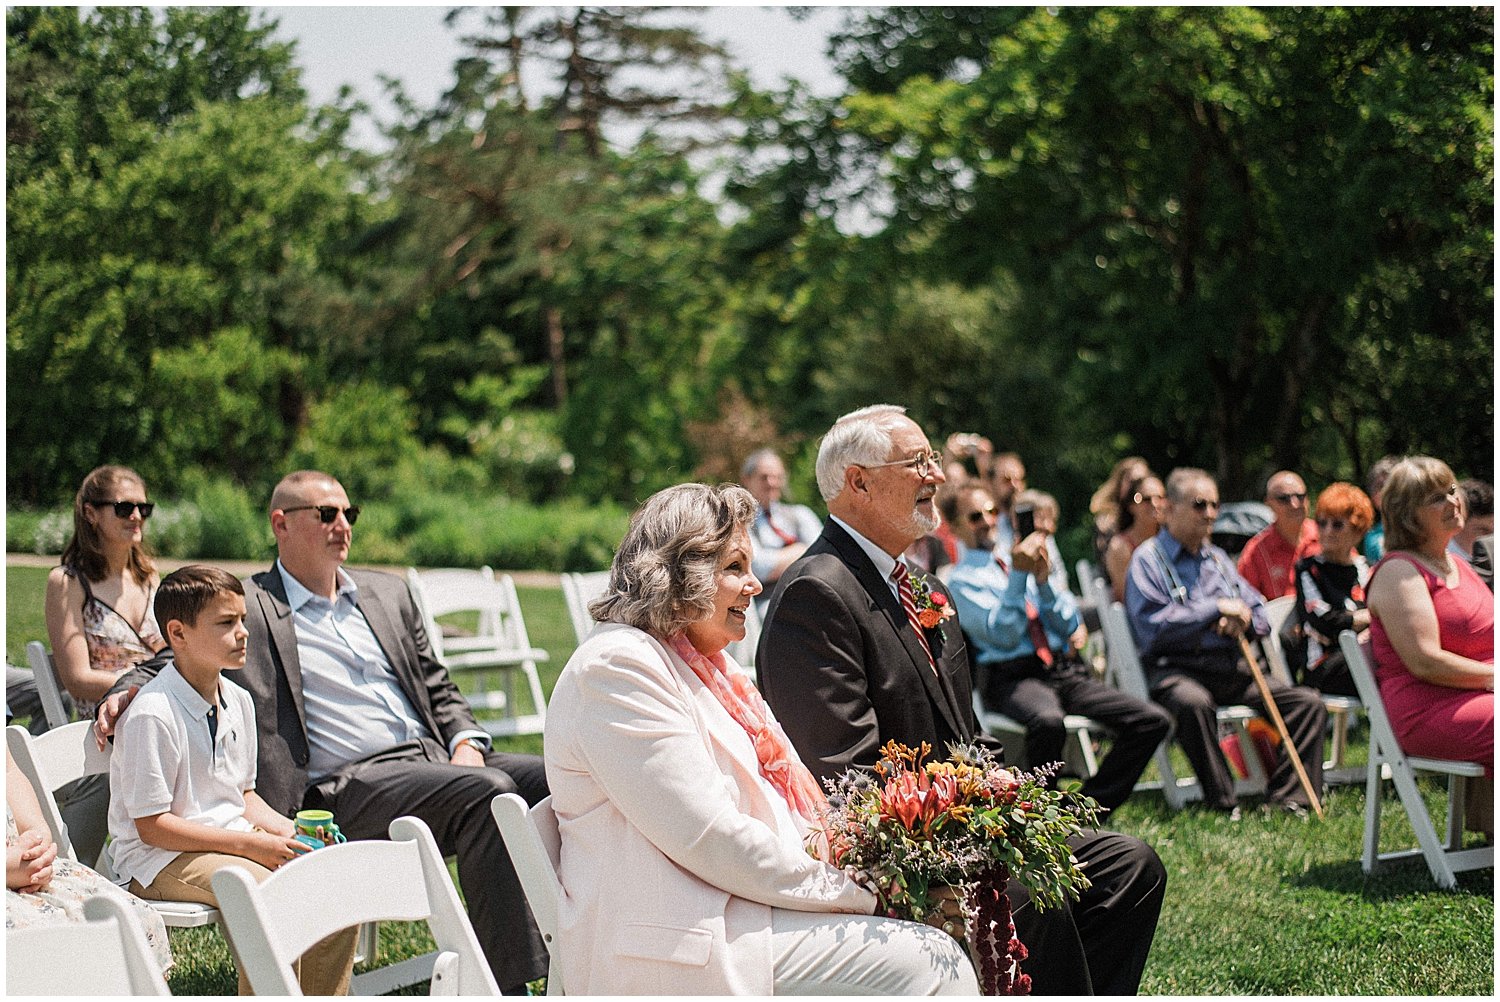 Ault Park Rose Garden Wedding | Cincinnati, Ohio